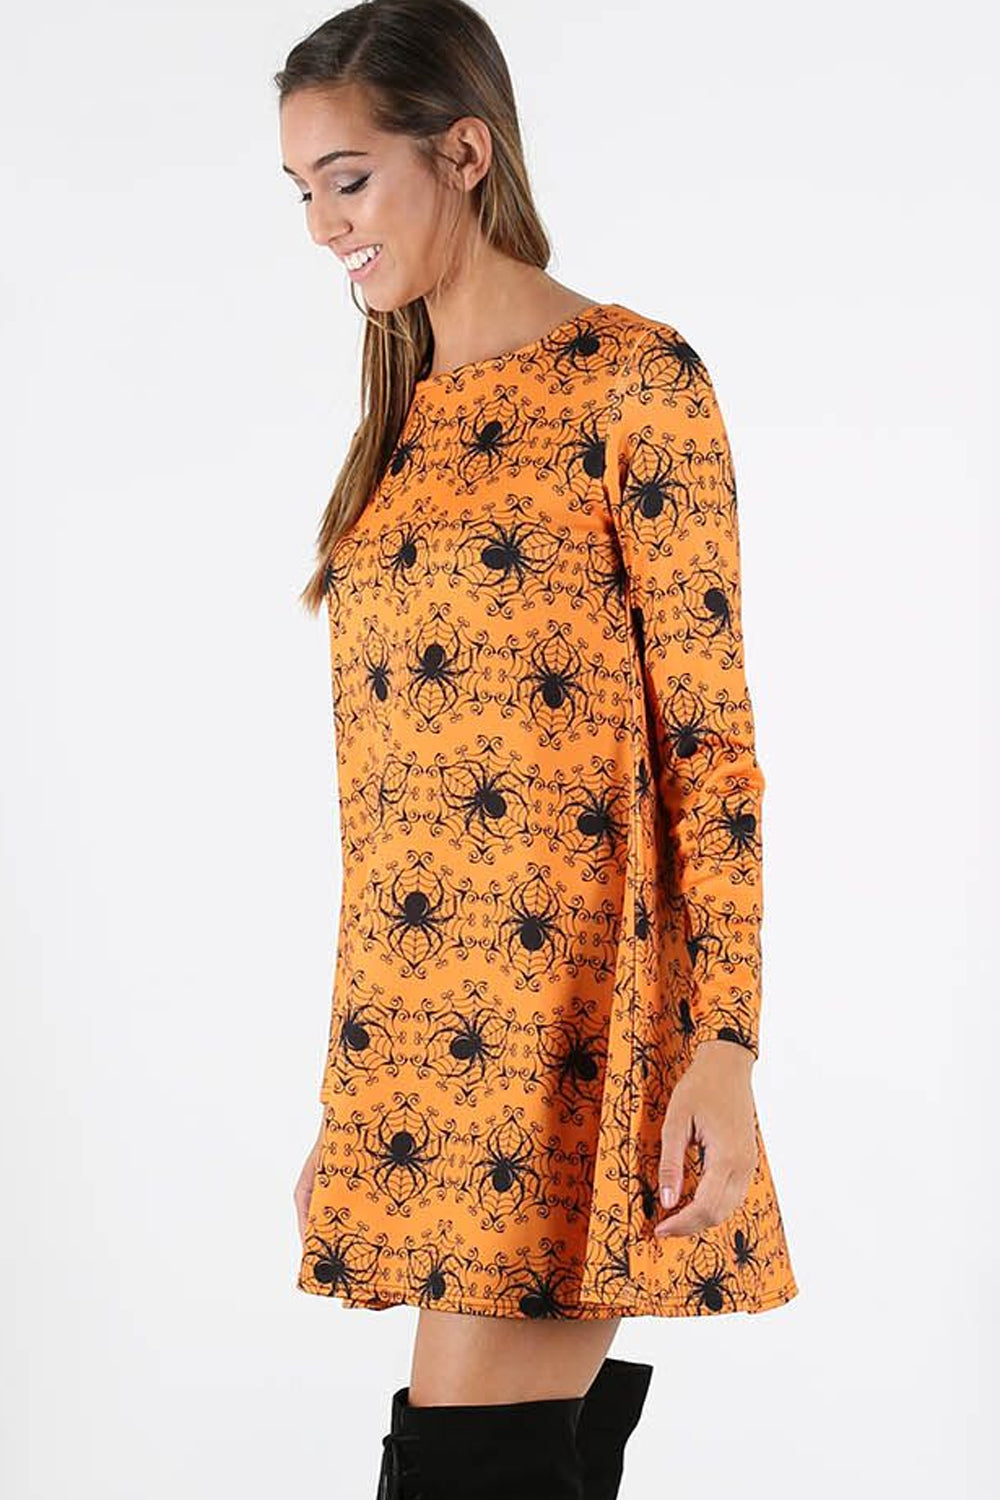 Long Sleeve Orange Halloween Mini Dress - bejealous-com